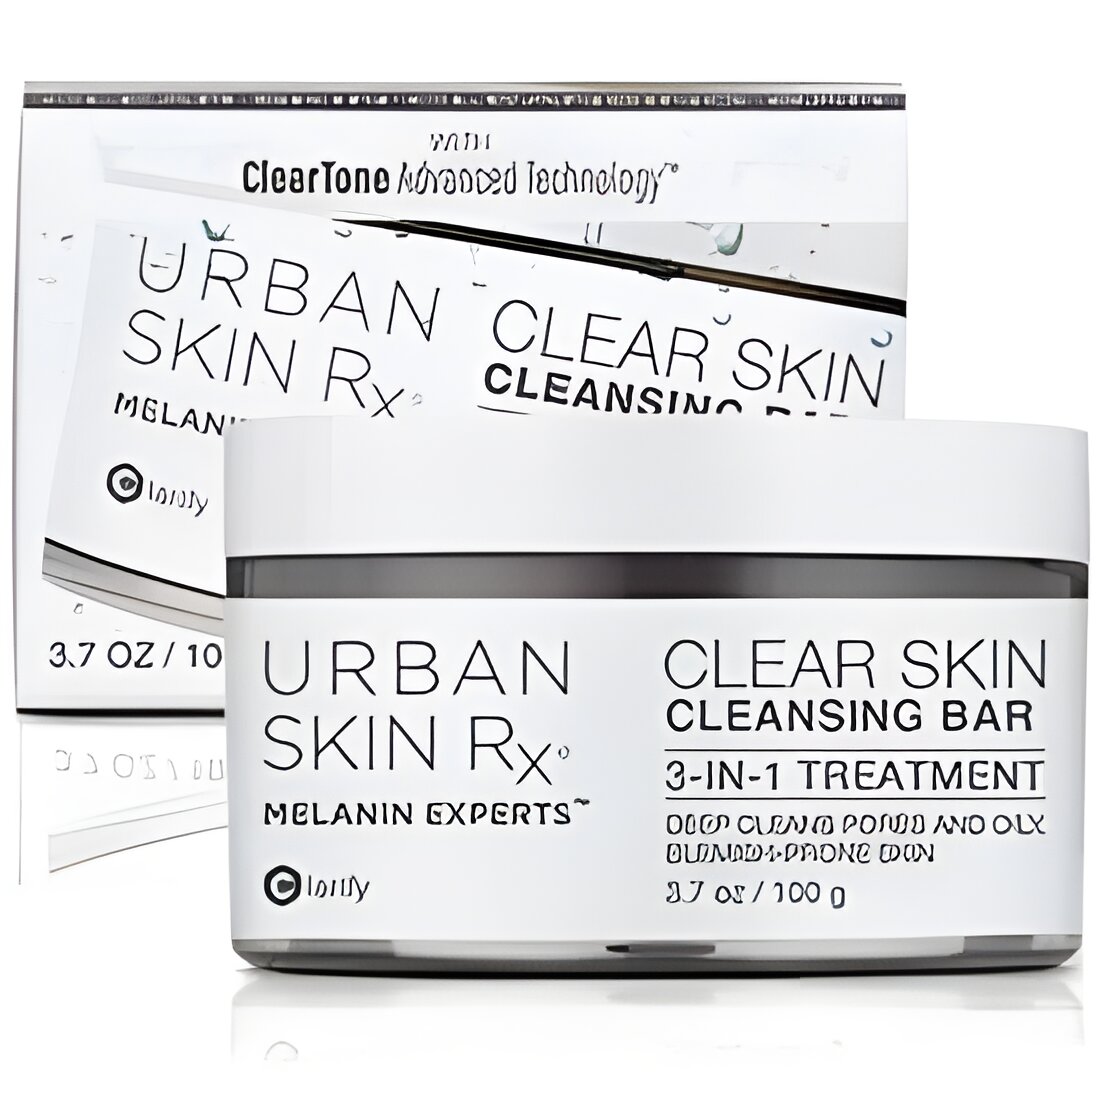 Free Urban Skin RX Clear Skin Cleansing Bar Sample